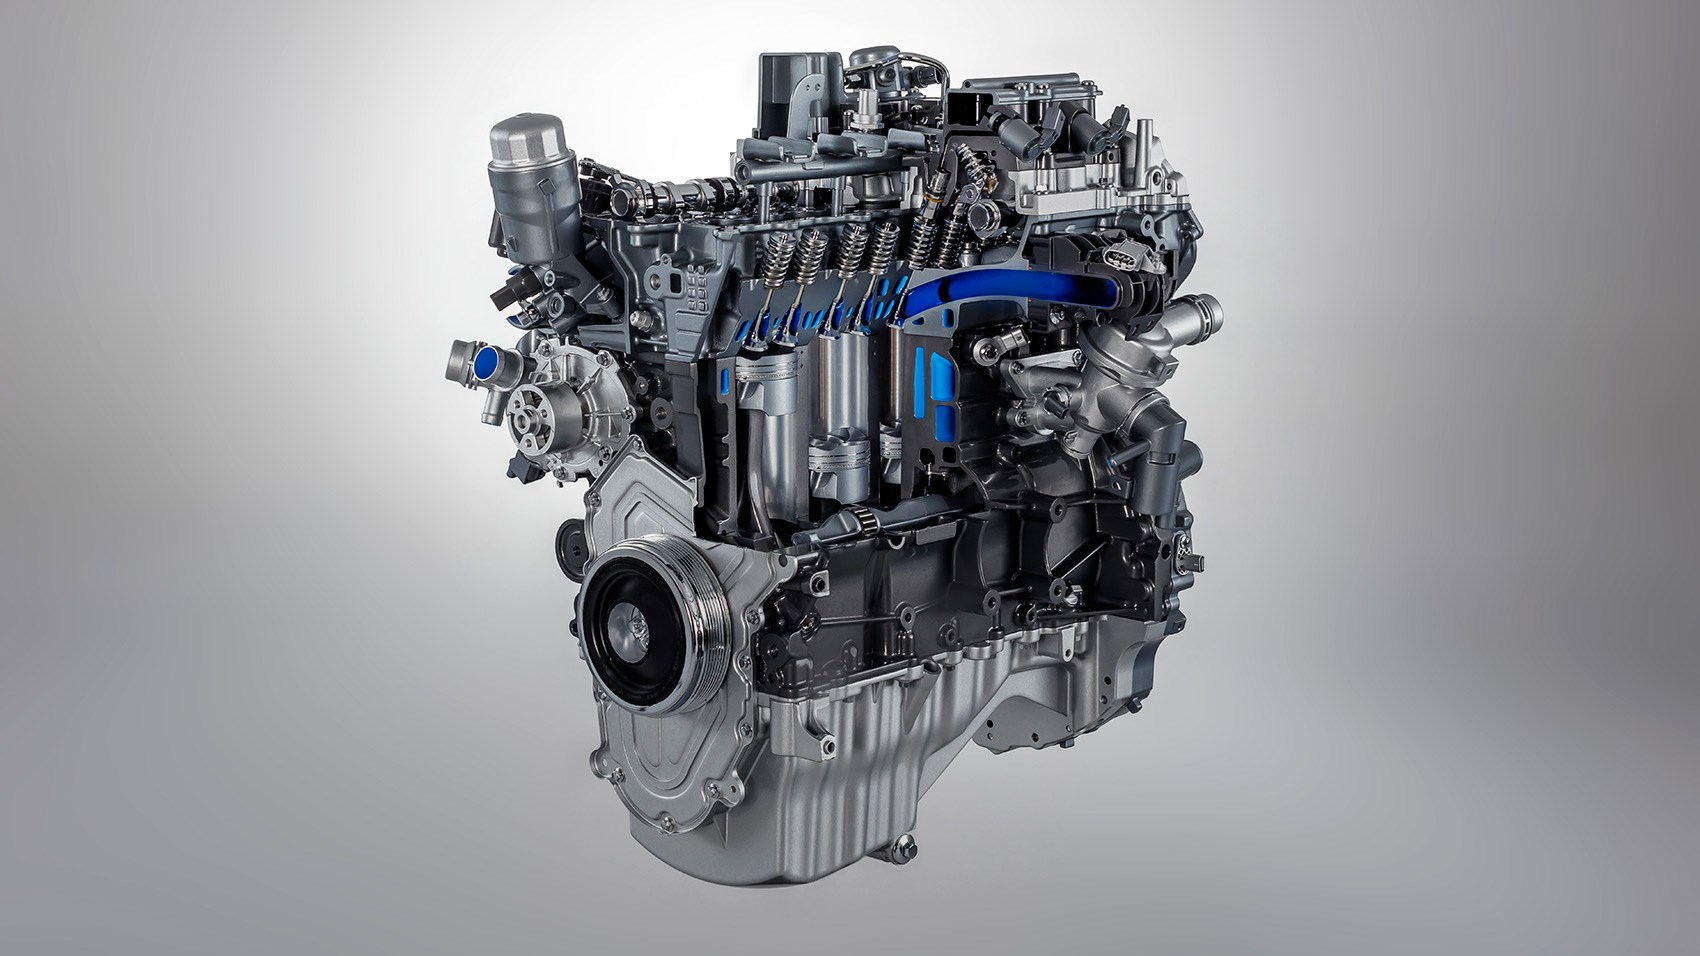 4 cylinder engine: the Ingenium motor powering the Jaguar F-type